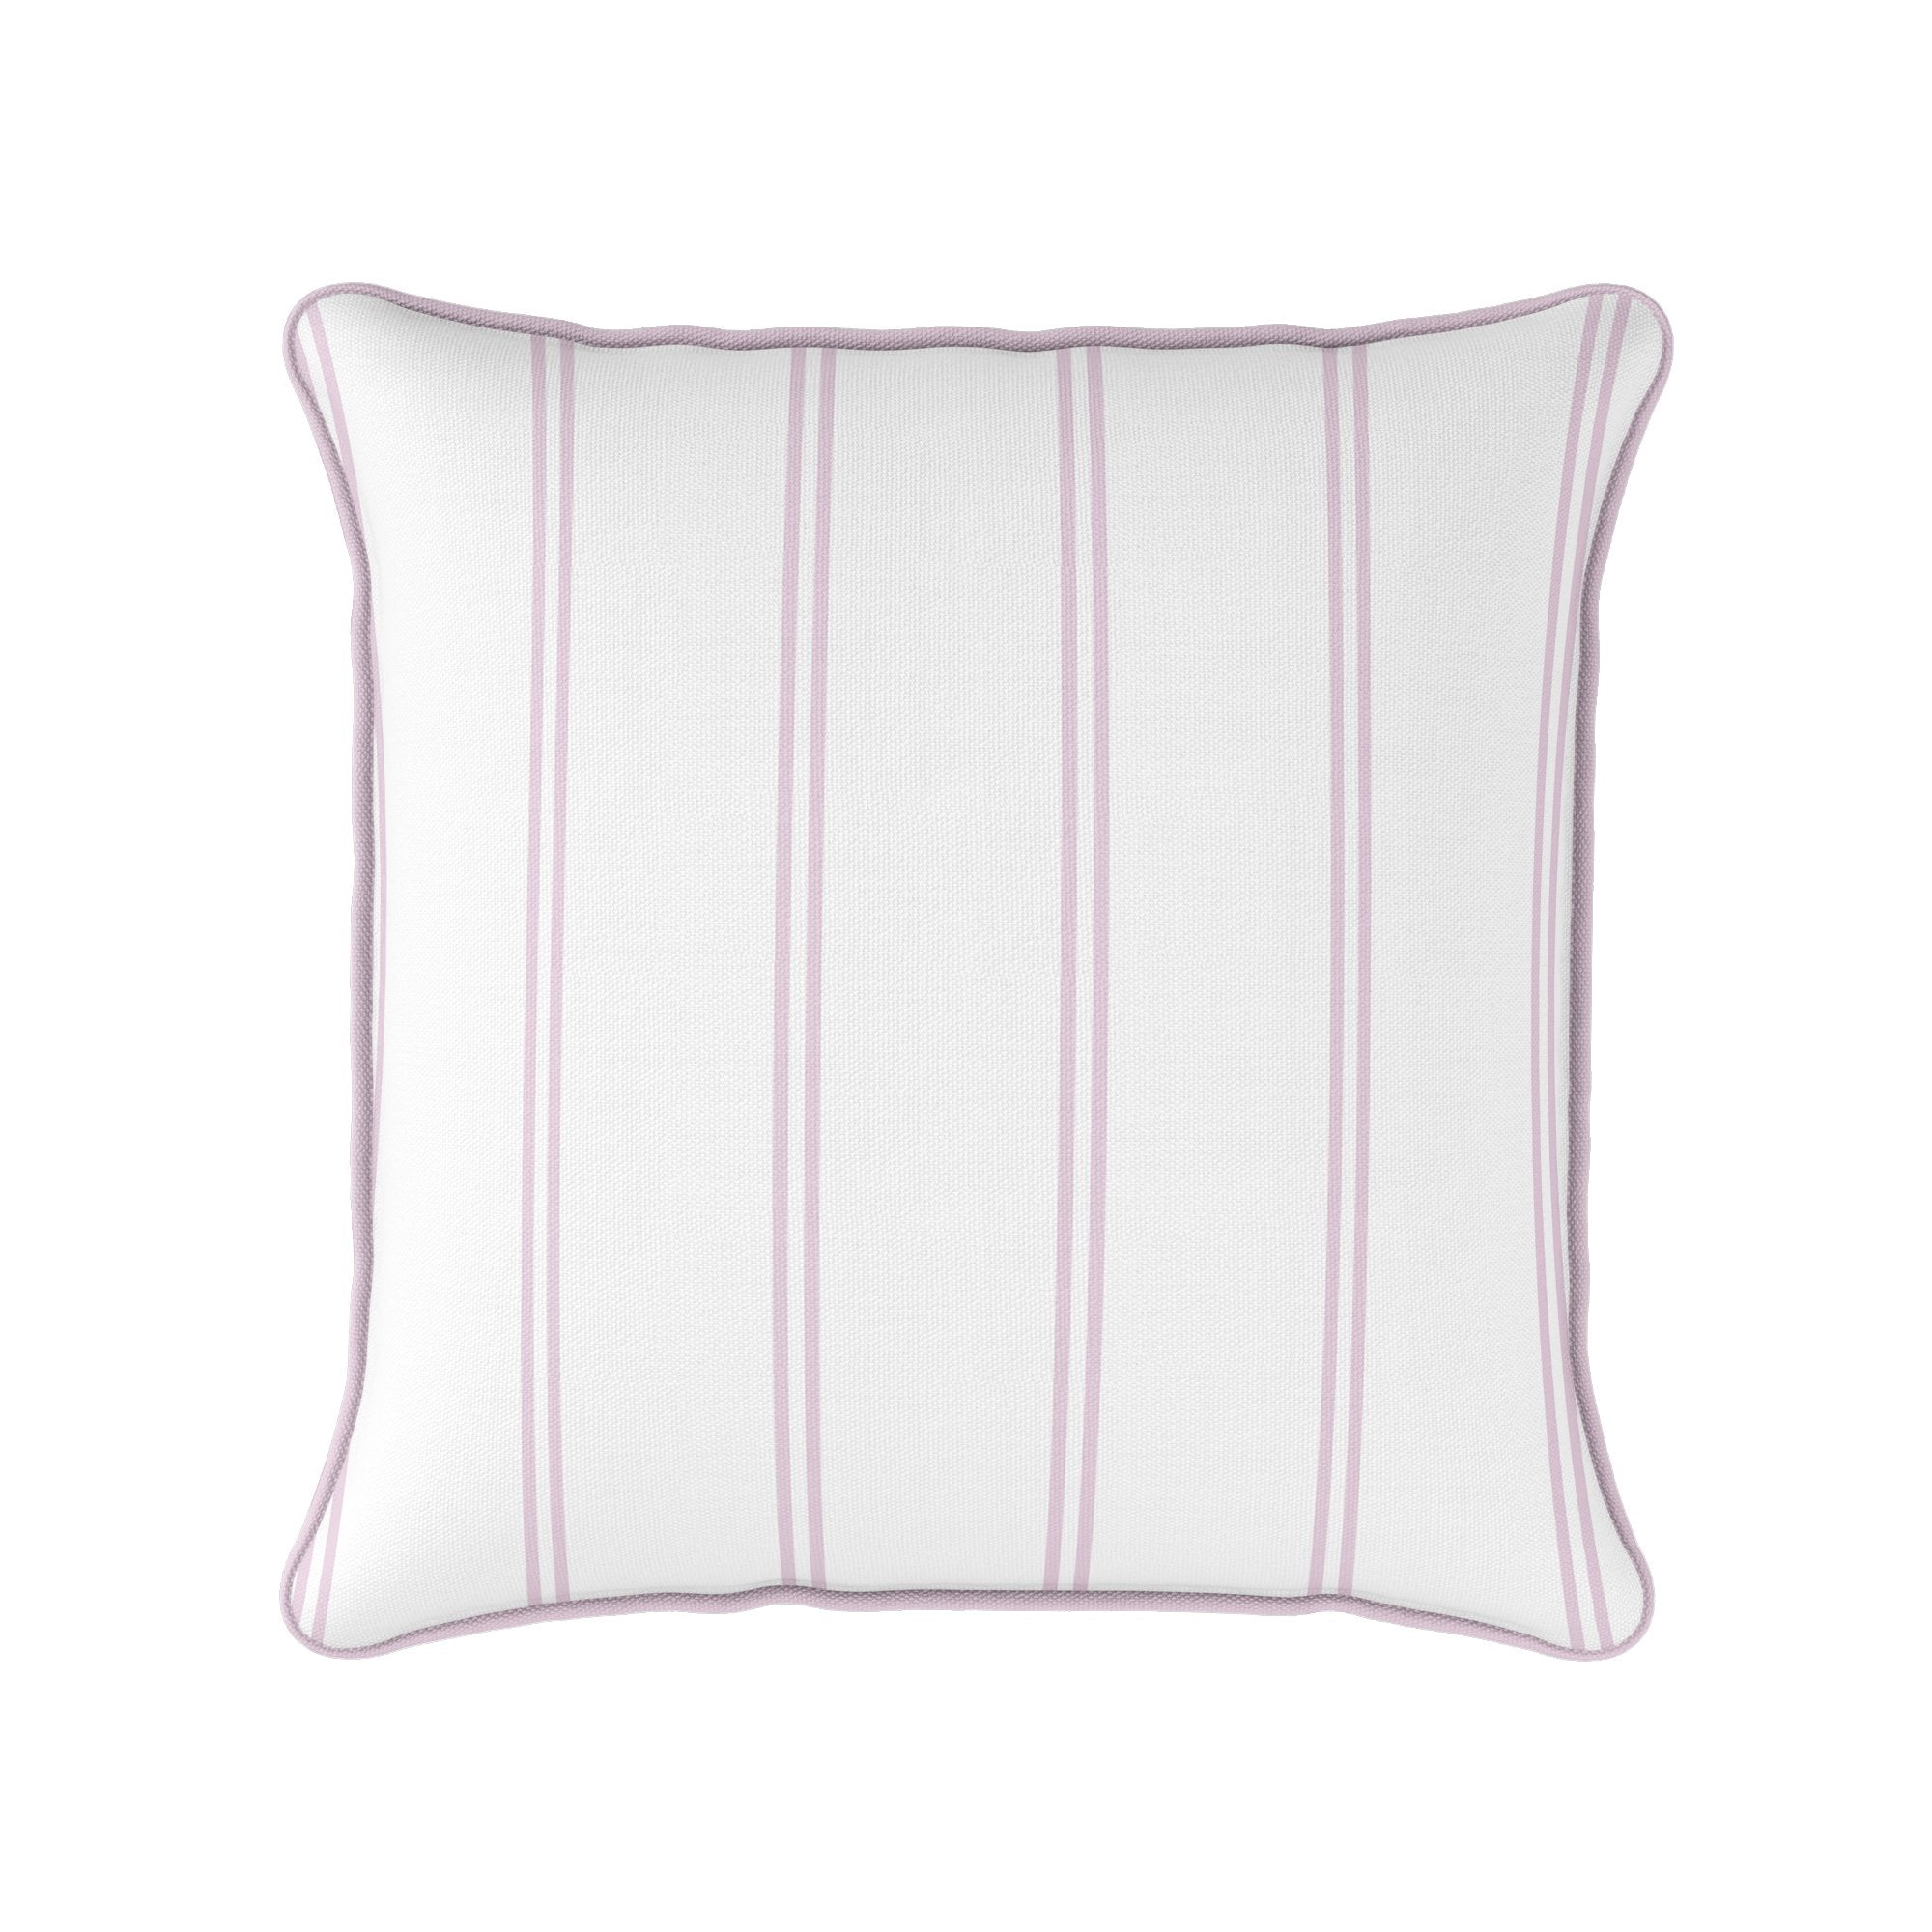 French Stripe Cushion - Pinks - Hydrangea Lane Home